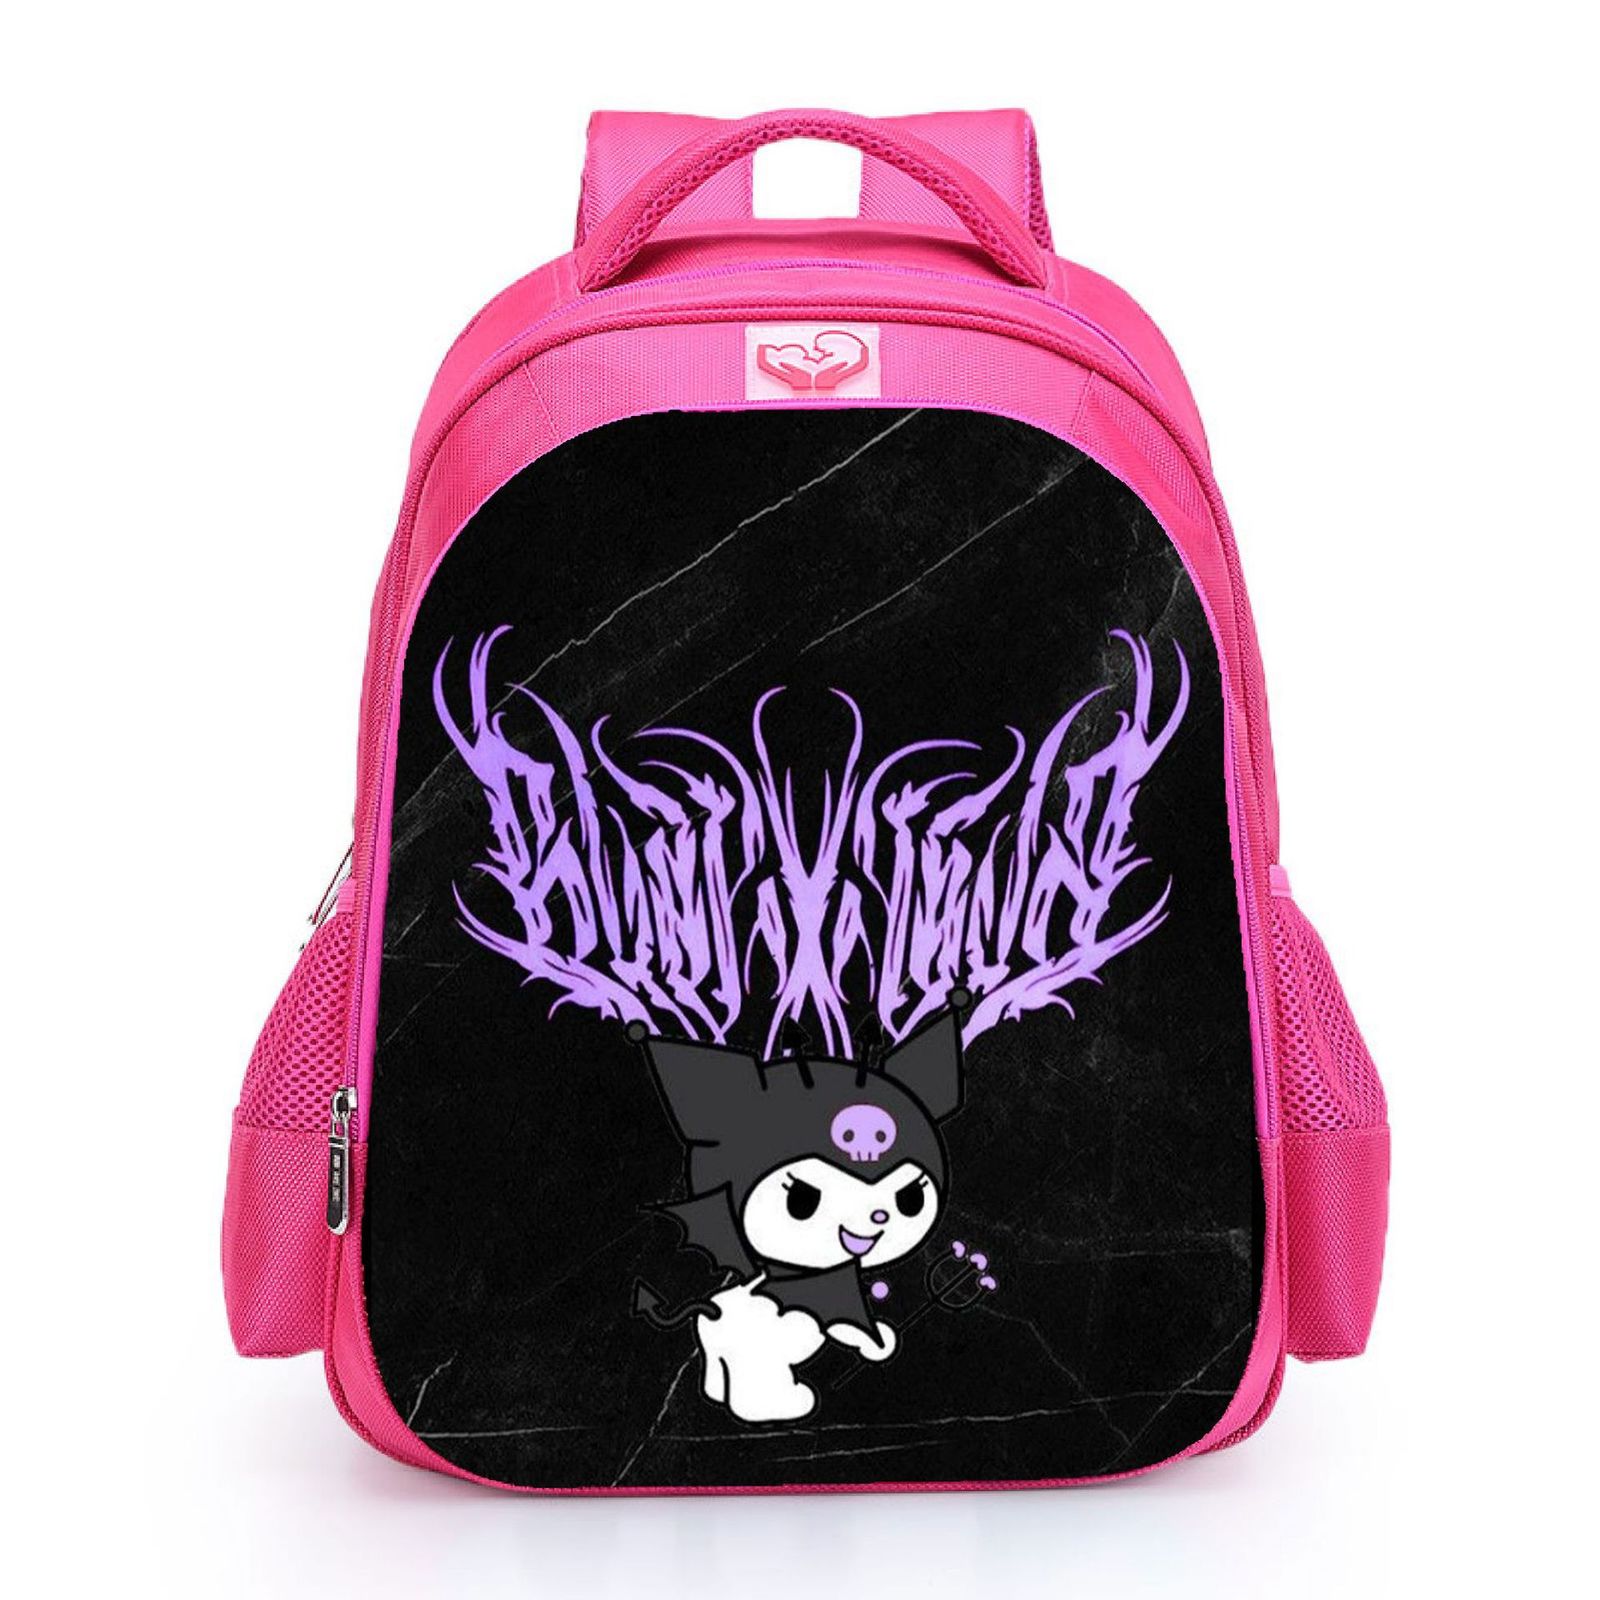 Primary image for Sanrio kuromi backpack student schoolbag outdoor travel bag children girl boy sc